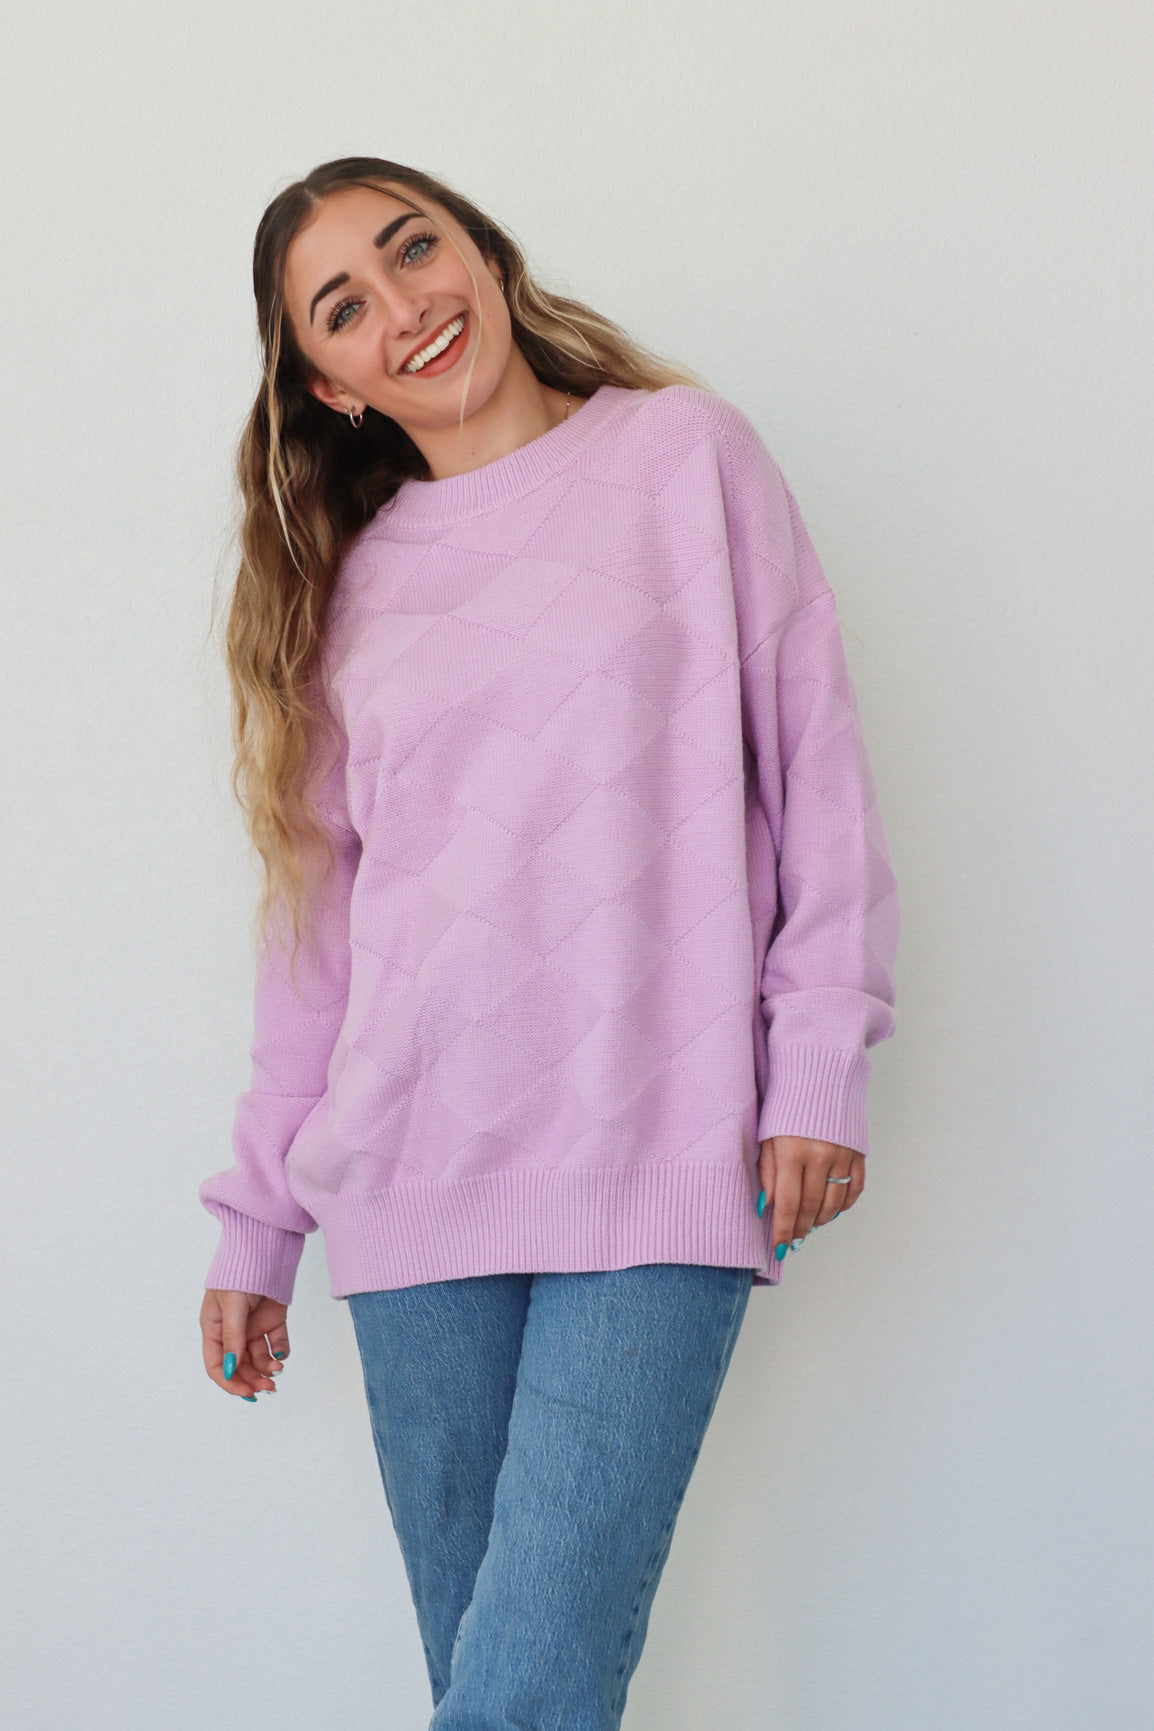 girl wearing lilac knit sweater